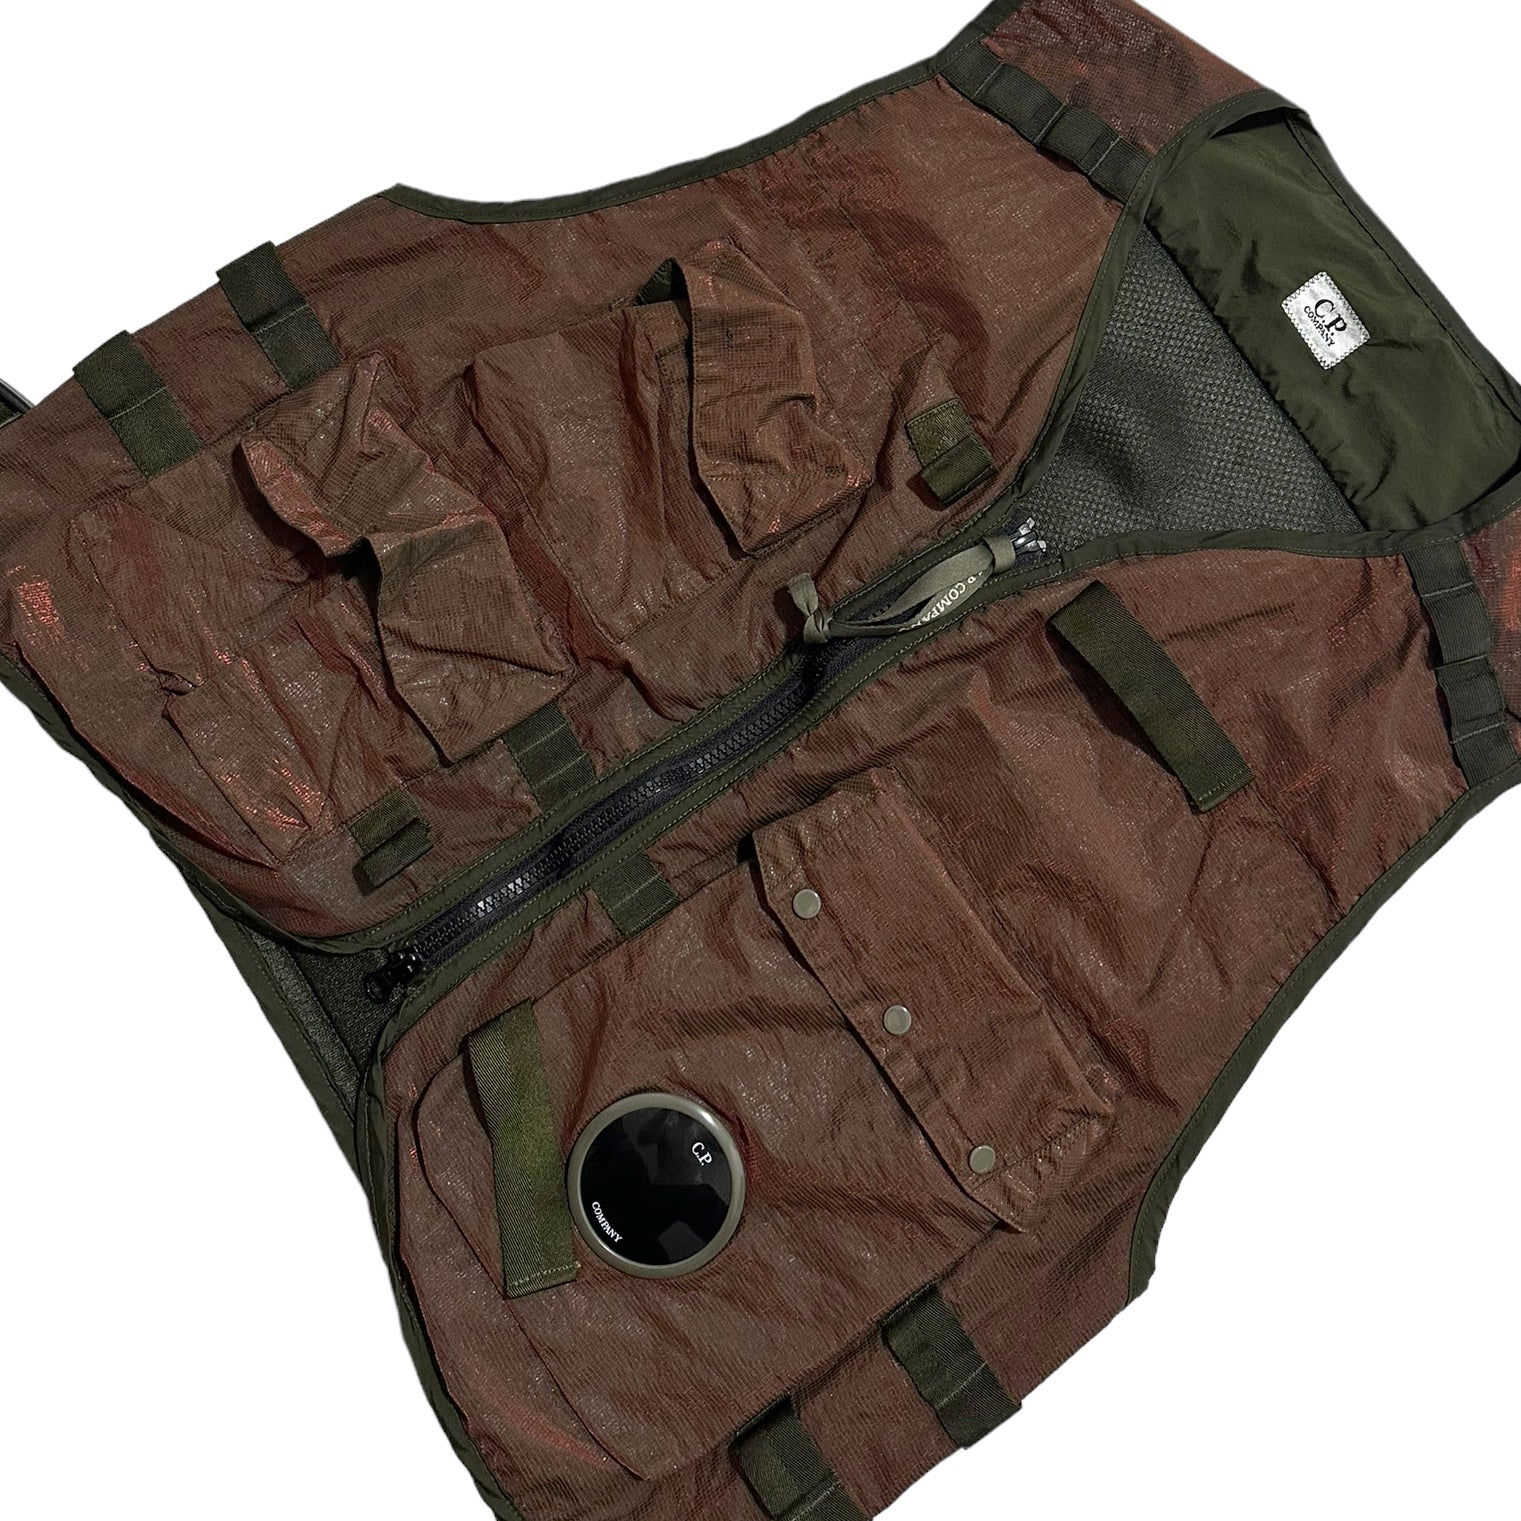 CP Company Prism Tactical Shimmer Vest